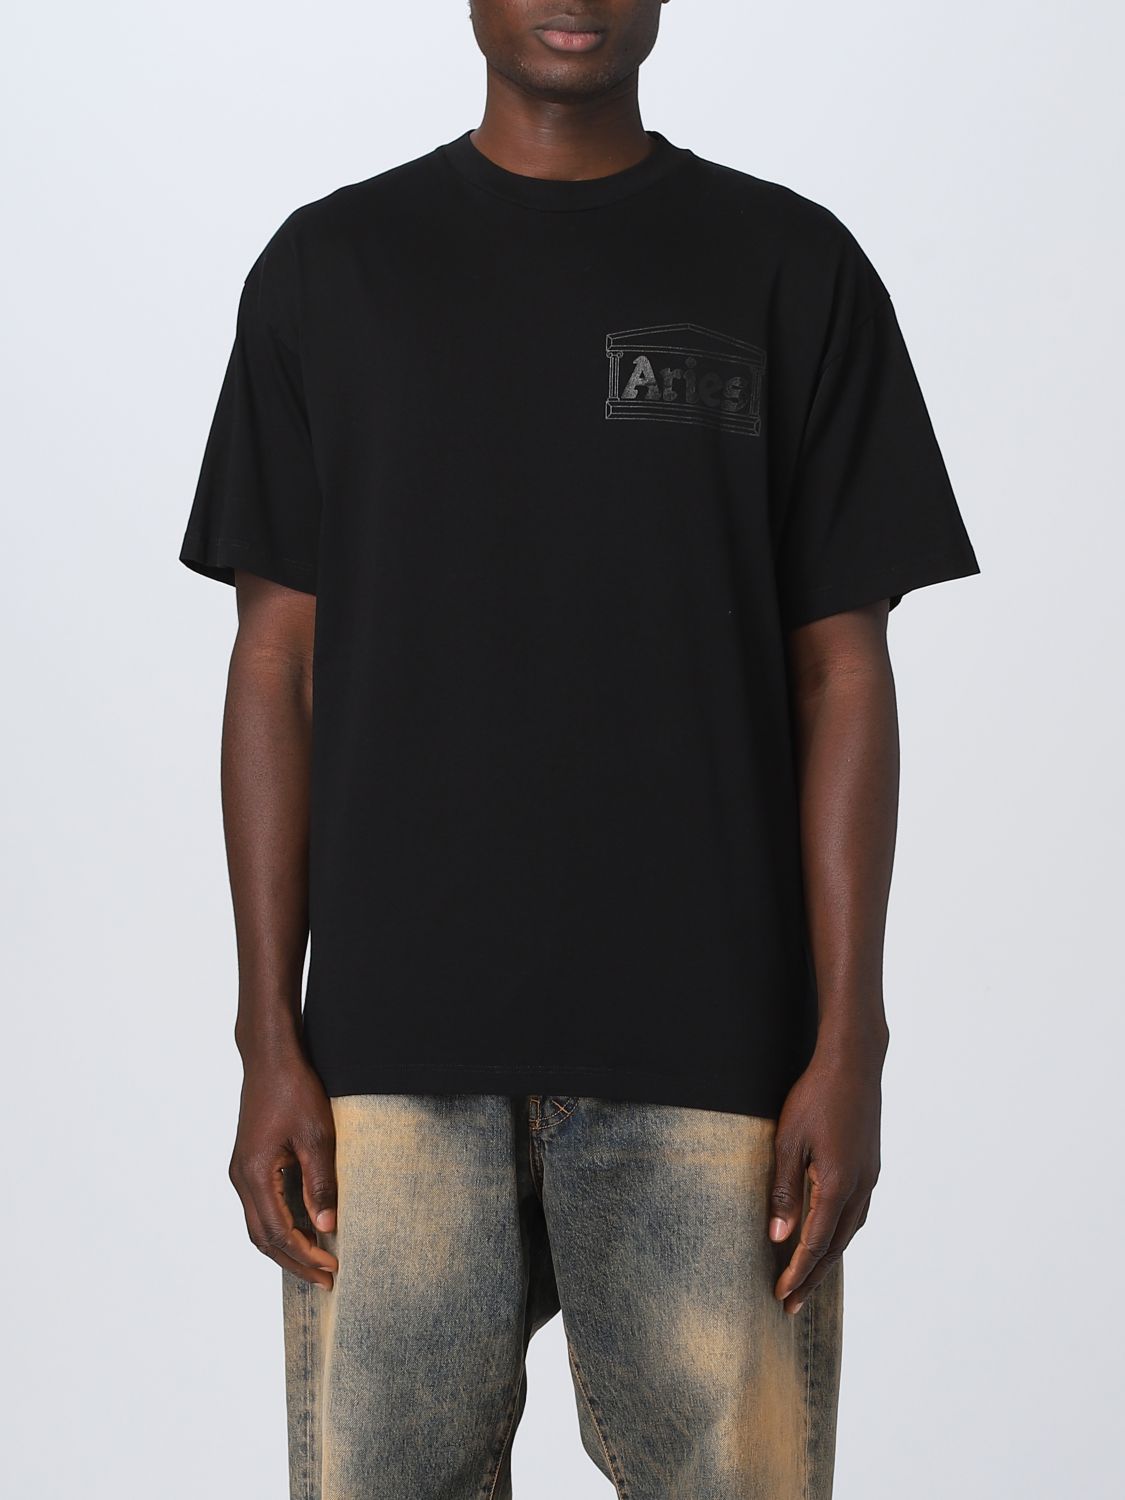 Aries T-Shirt ARIES Men colour Black